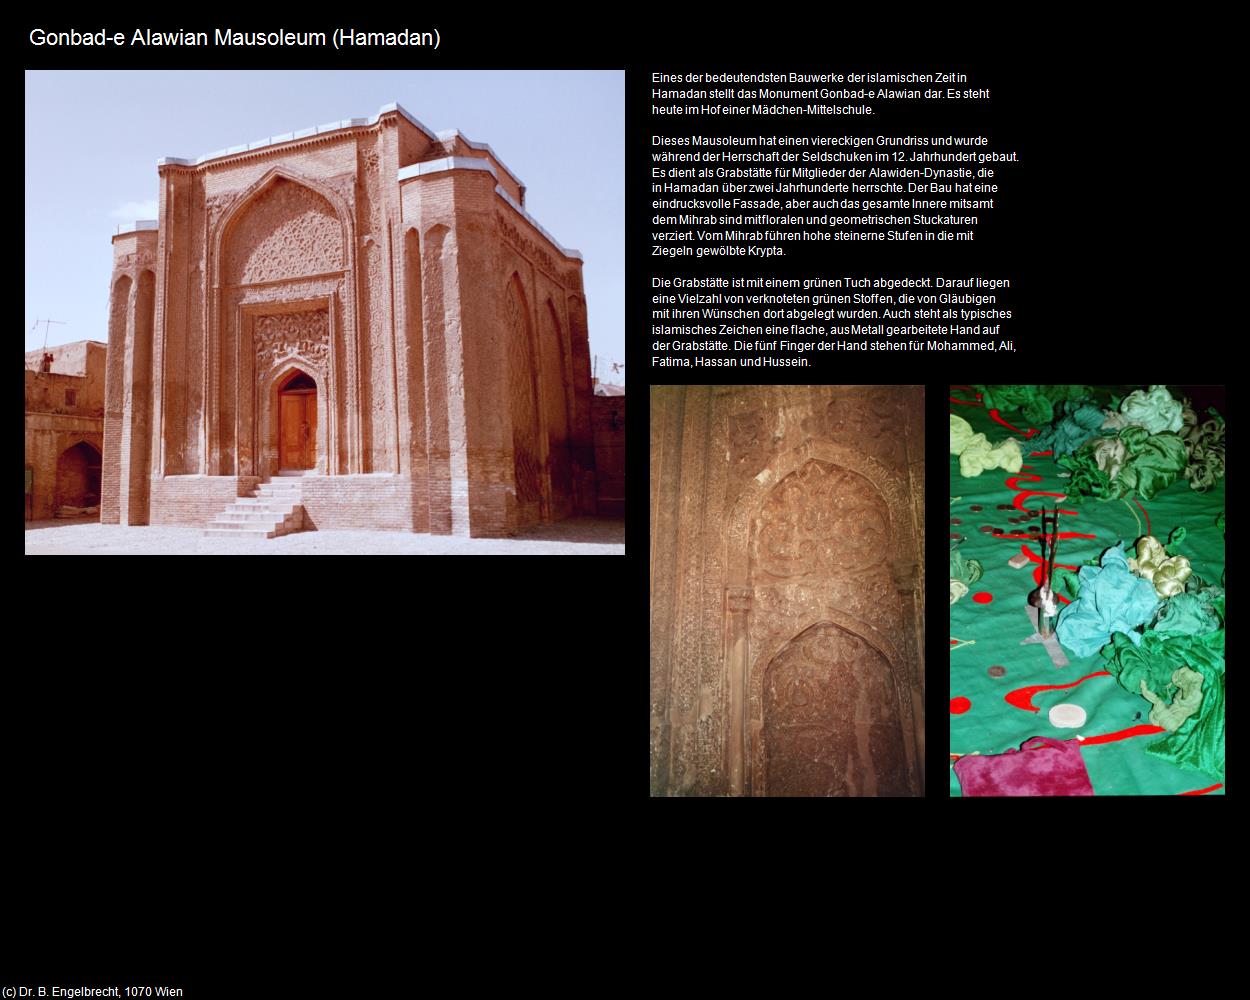 Gonbad-e Alawian Mausoleum  (Hamadan) in Iran